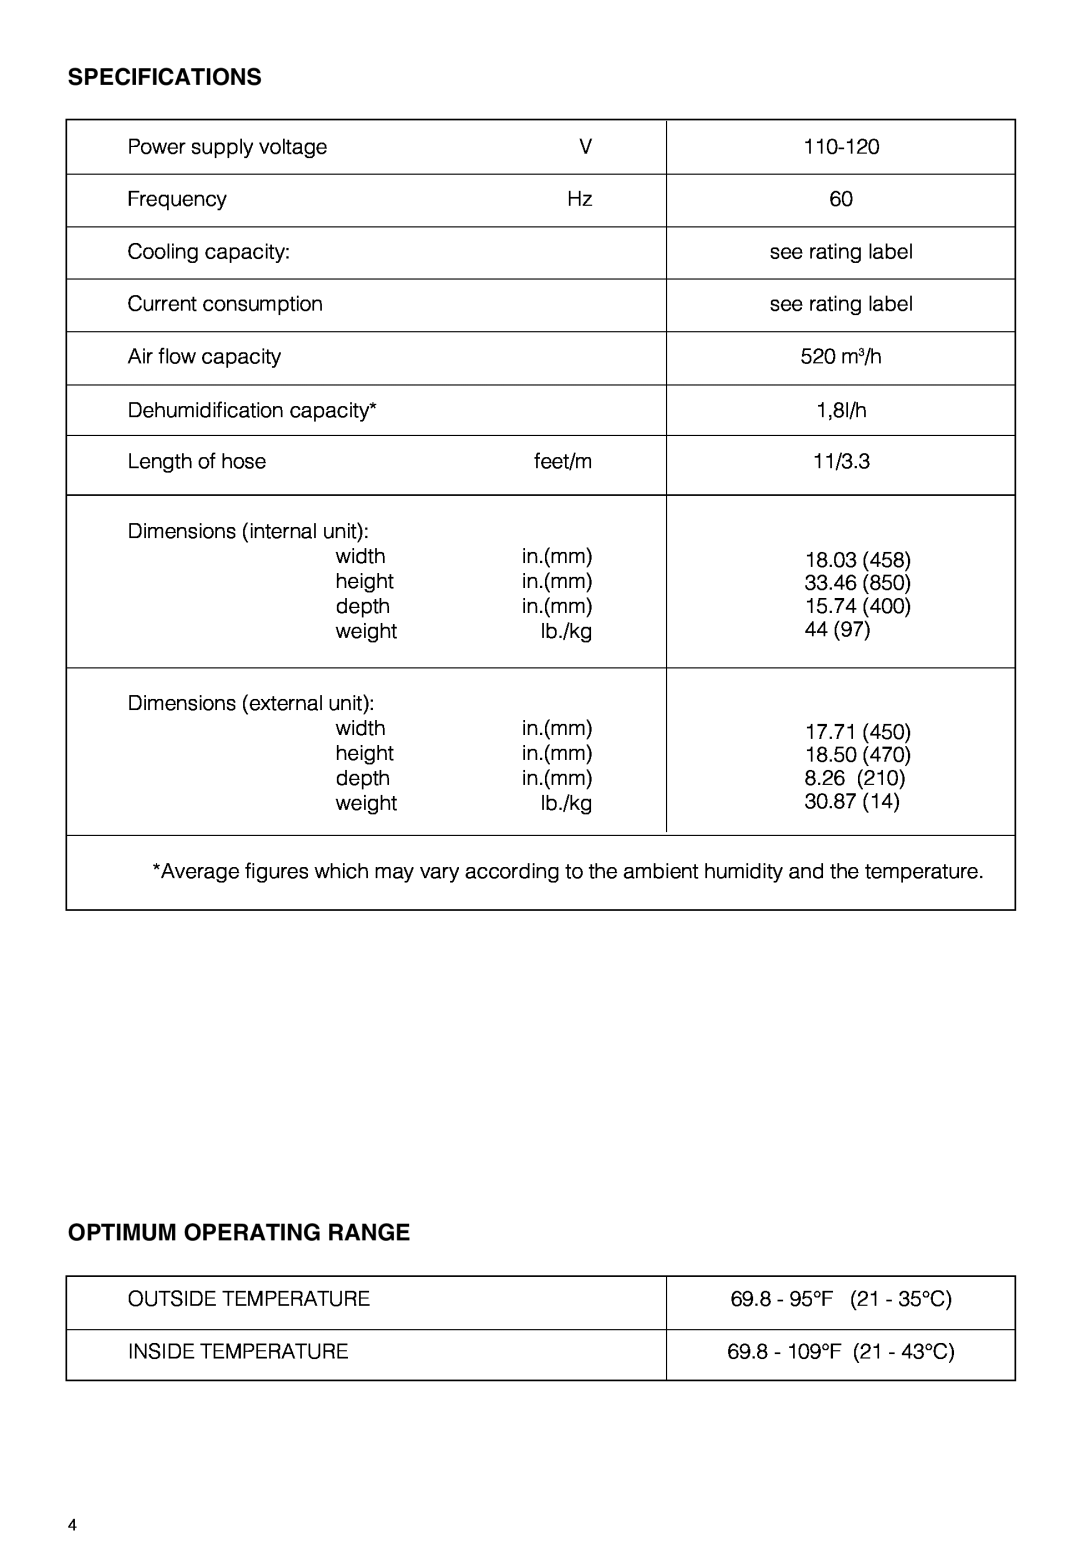 DeLonghi PAC GSR/MU owner manual Specifications, Optimum Operating Range 